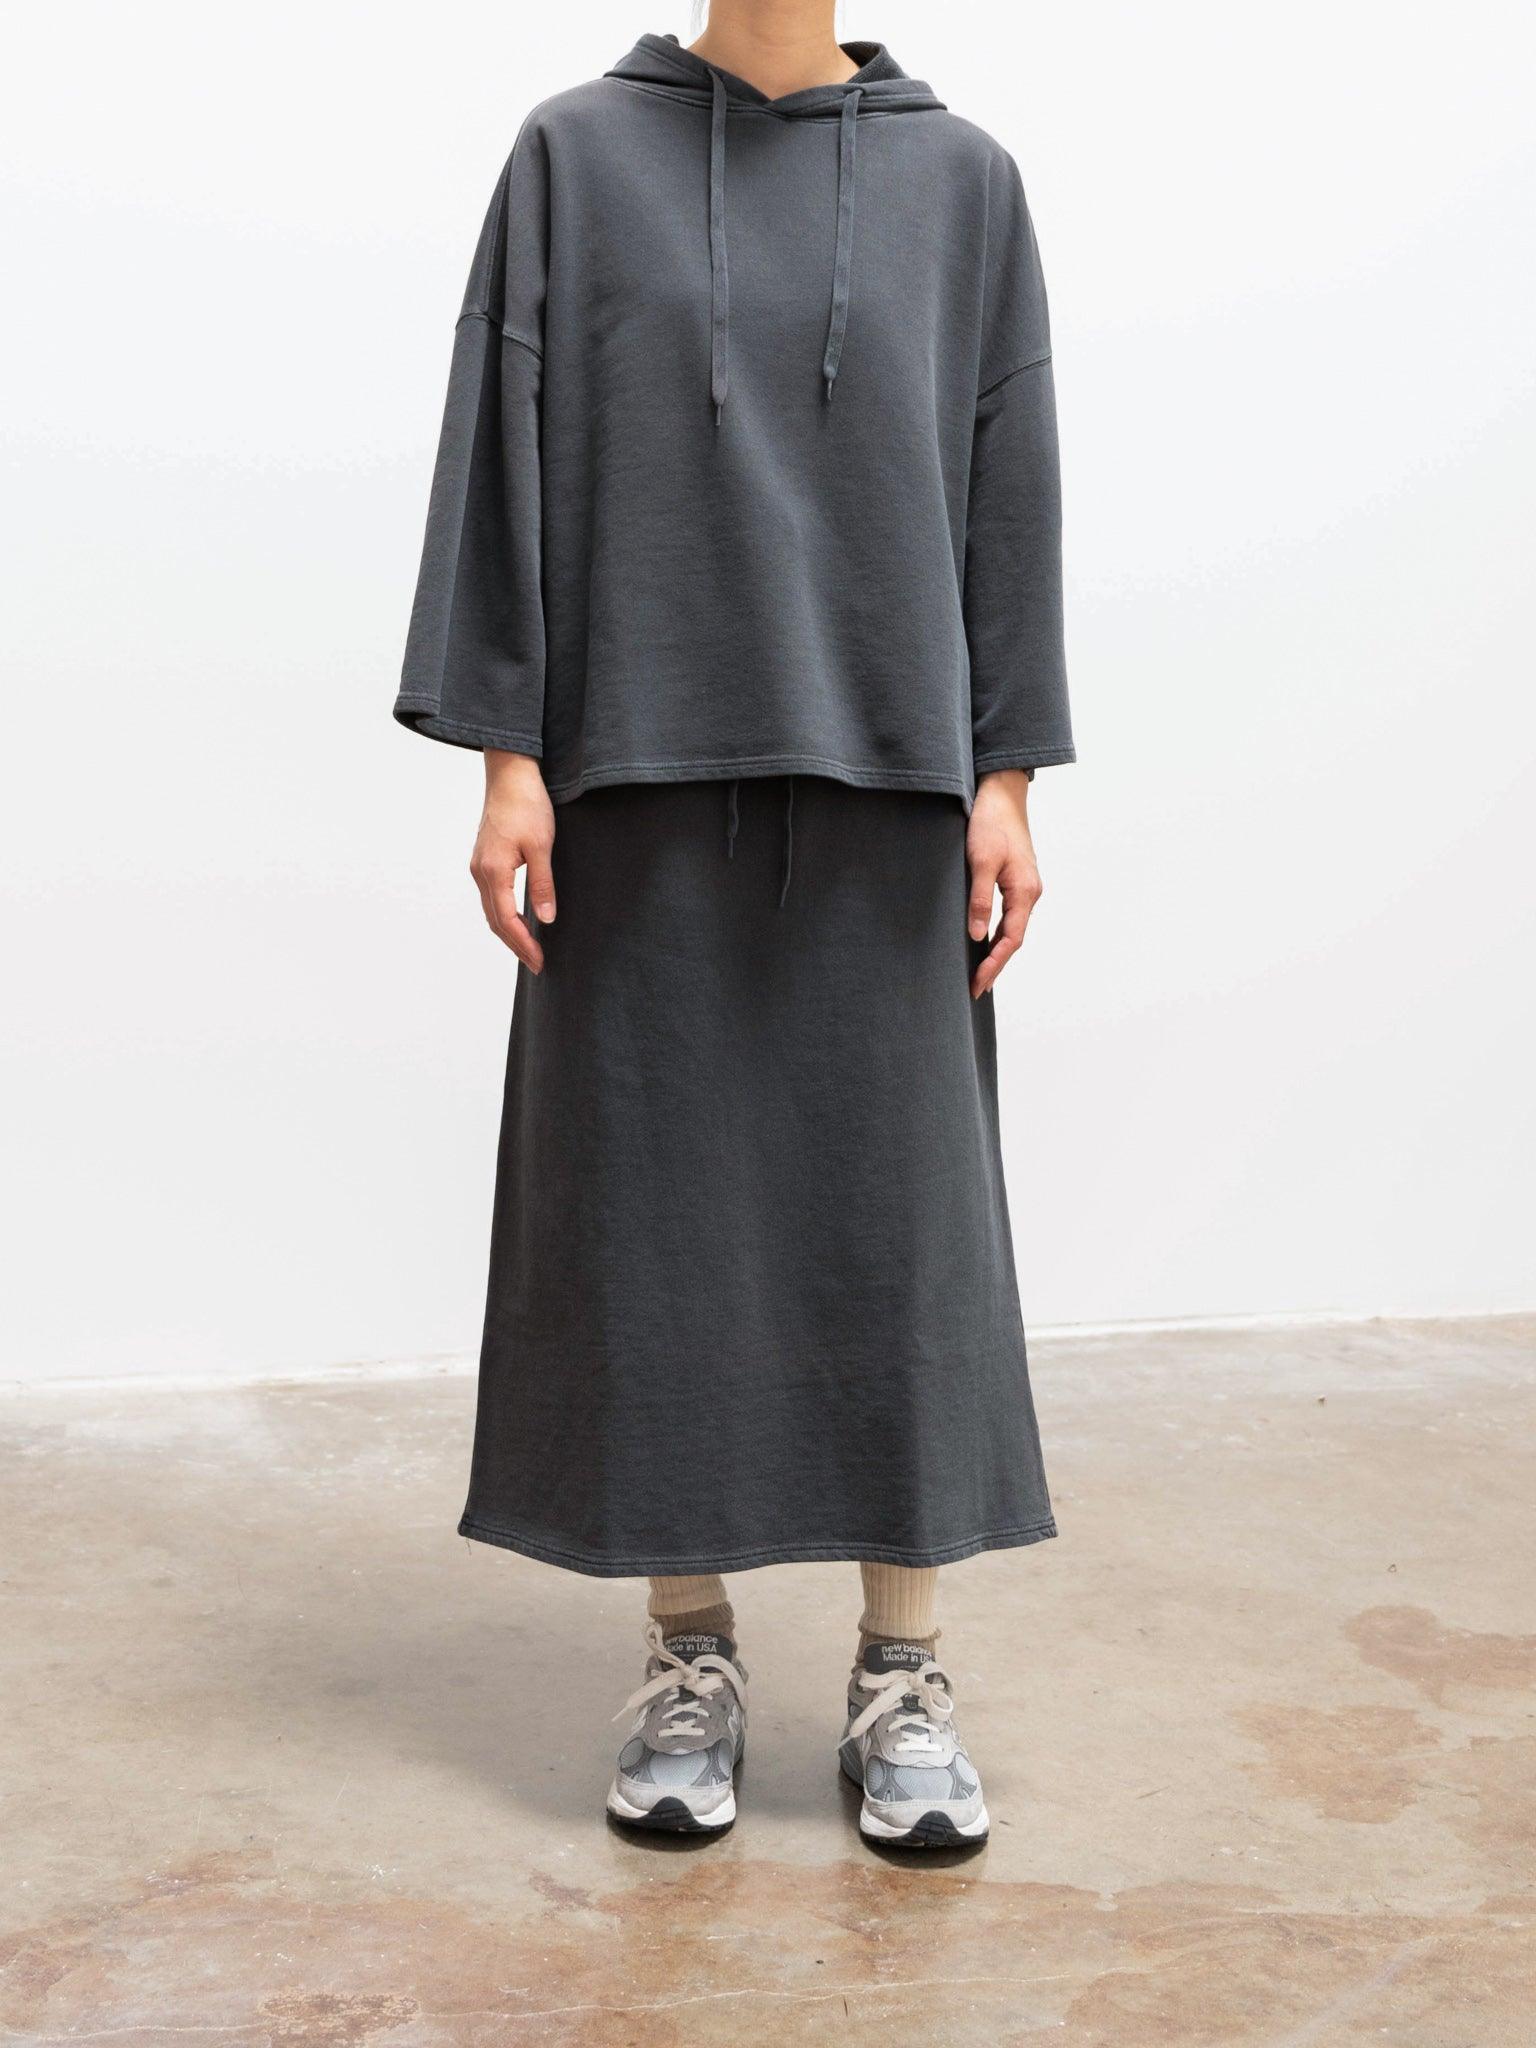 Namu Shop - Ichi Antiquites Hooded Sweatshirt - Charcoal